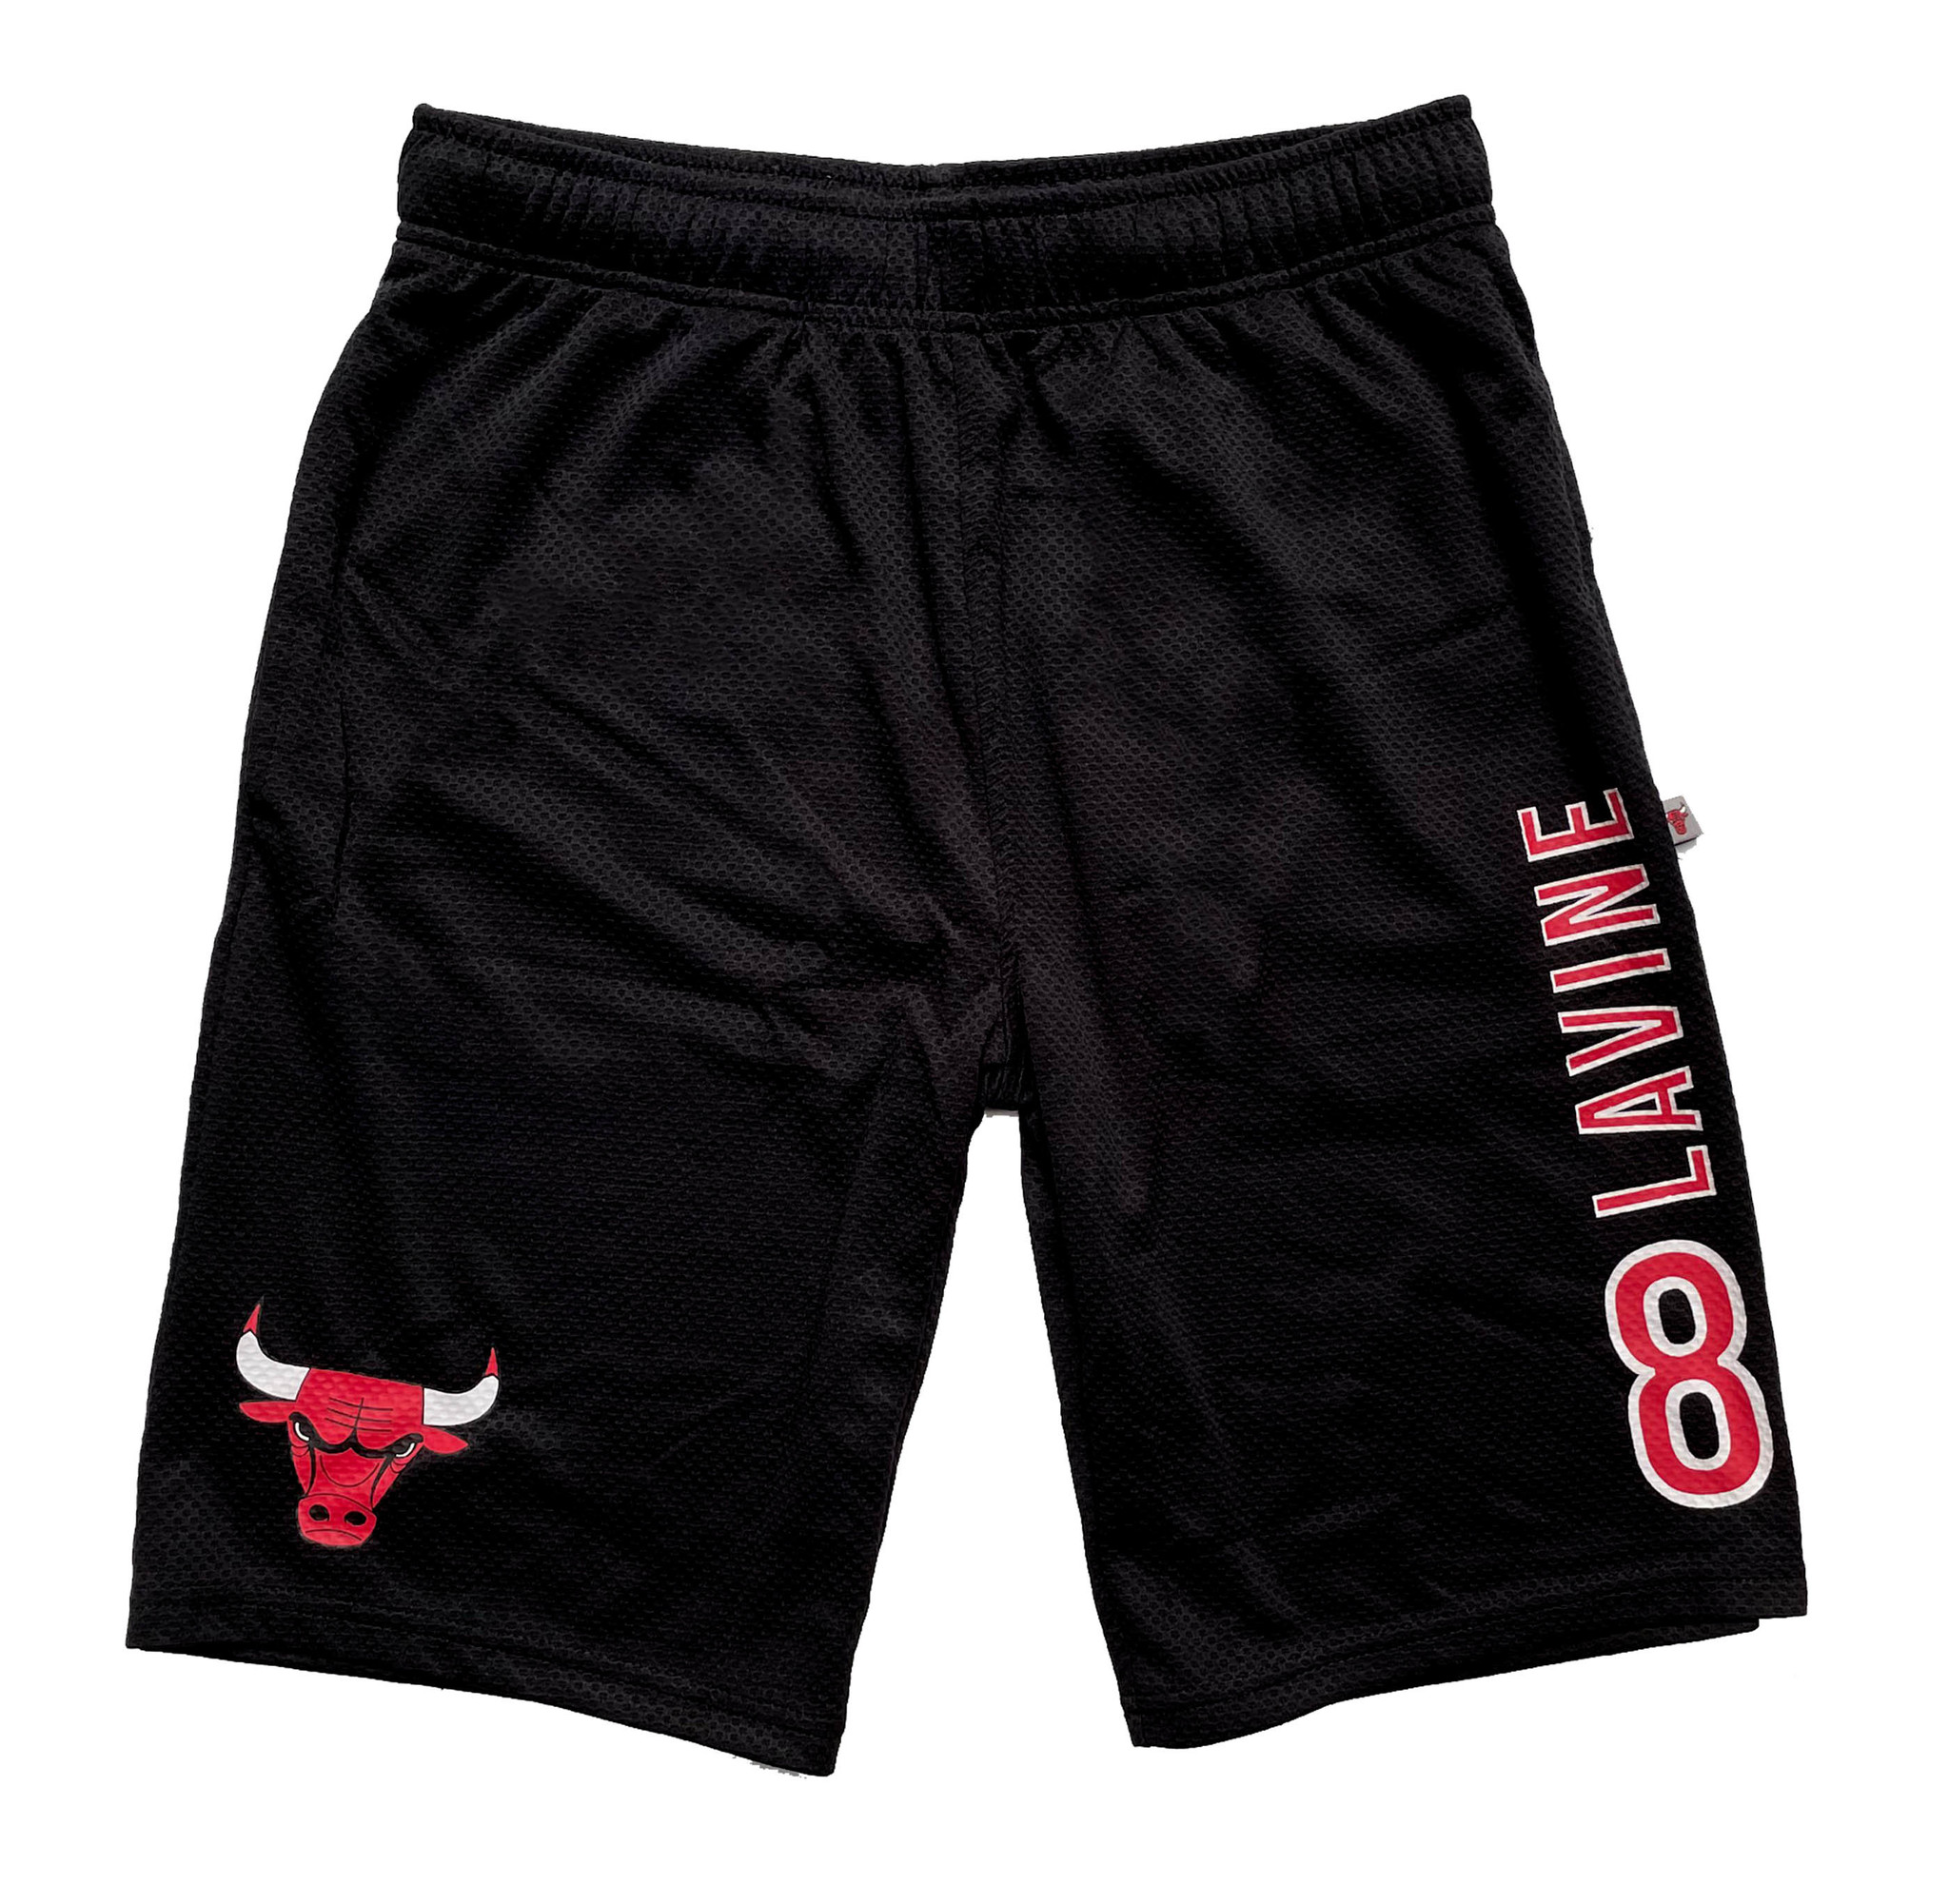 Men's Nike Chicago Bulls Zach Lavine T-Shirt